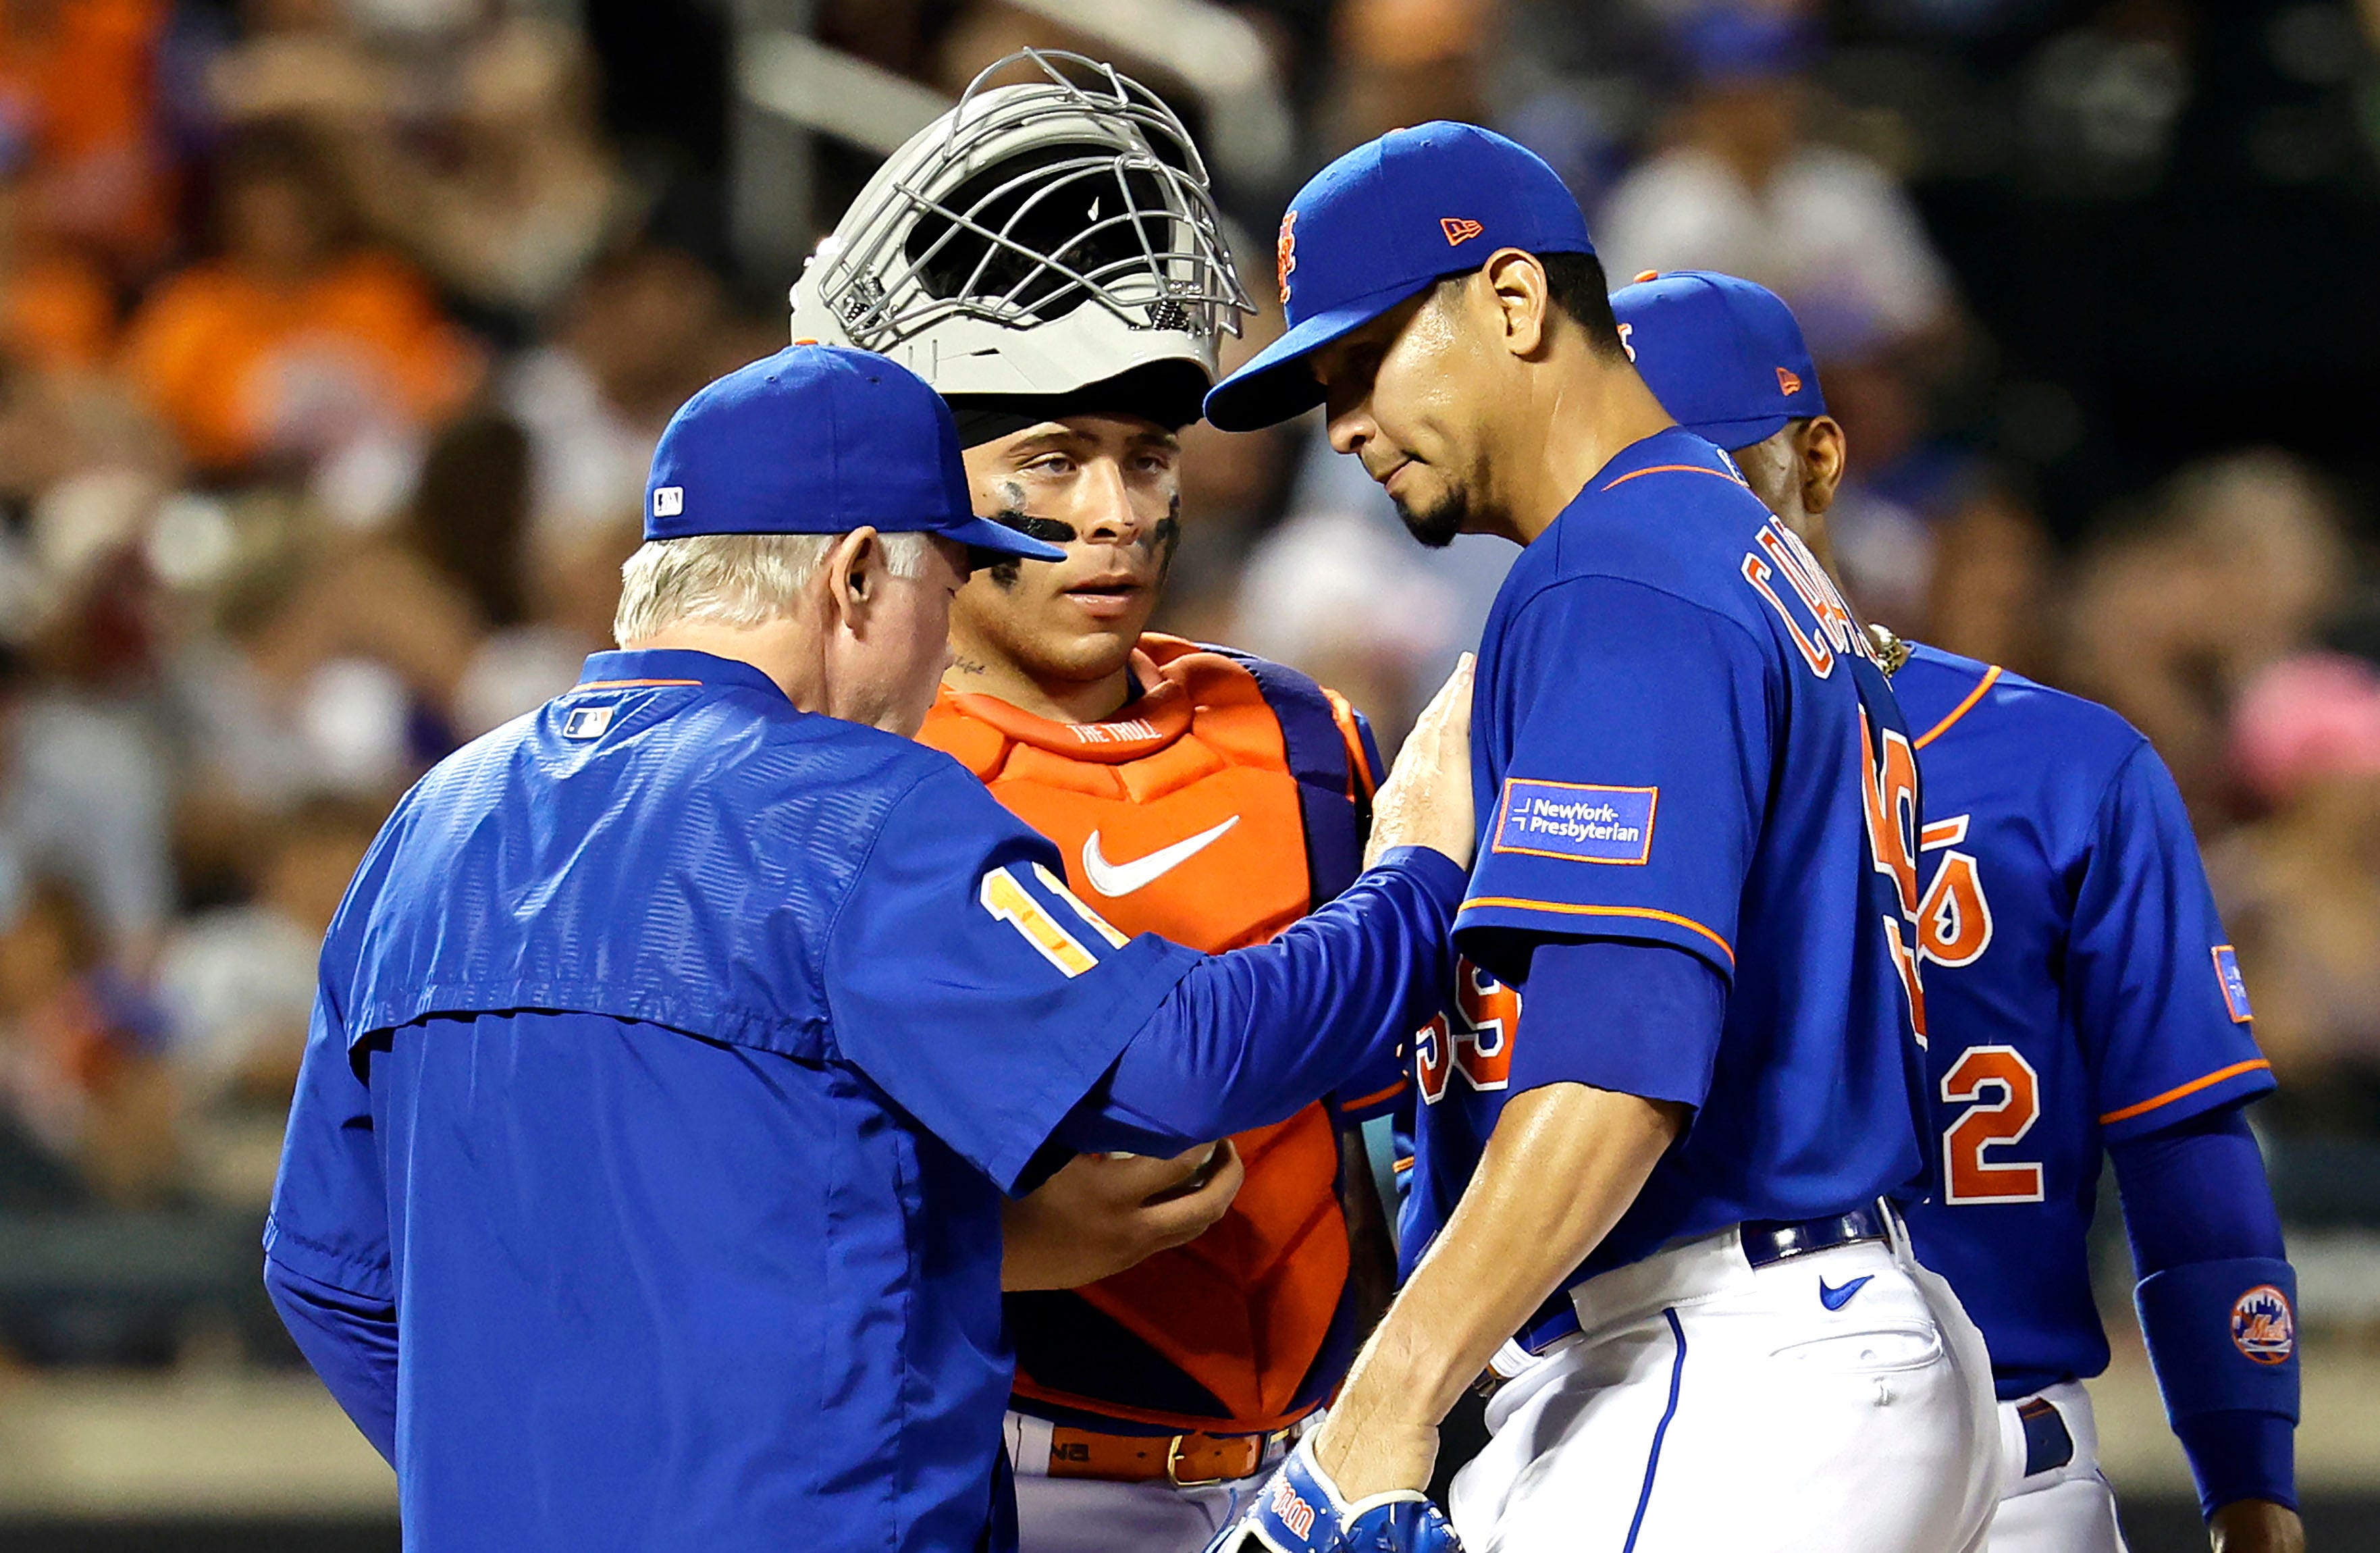 Mets injury updates: Latest on Edwin Diaz, Jose Quintana, Carlos Carrasco